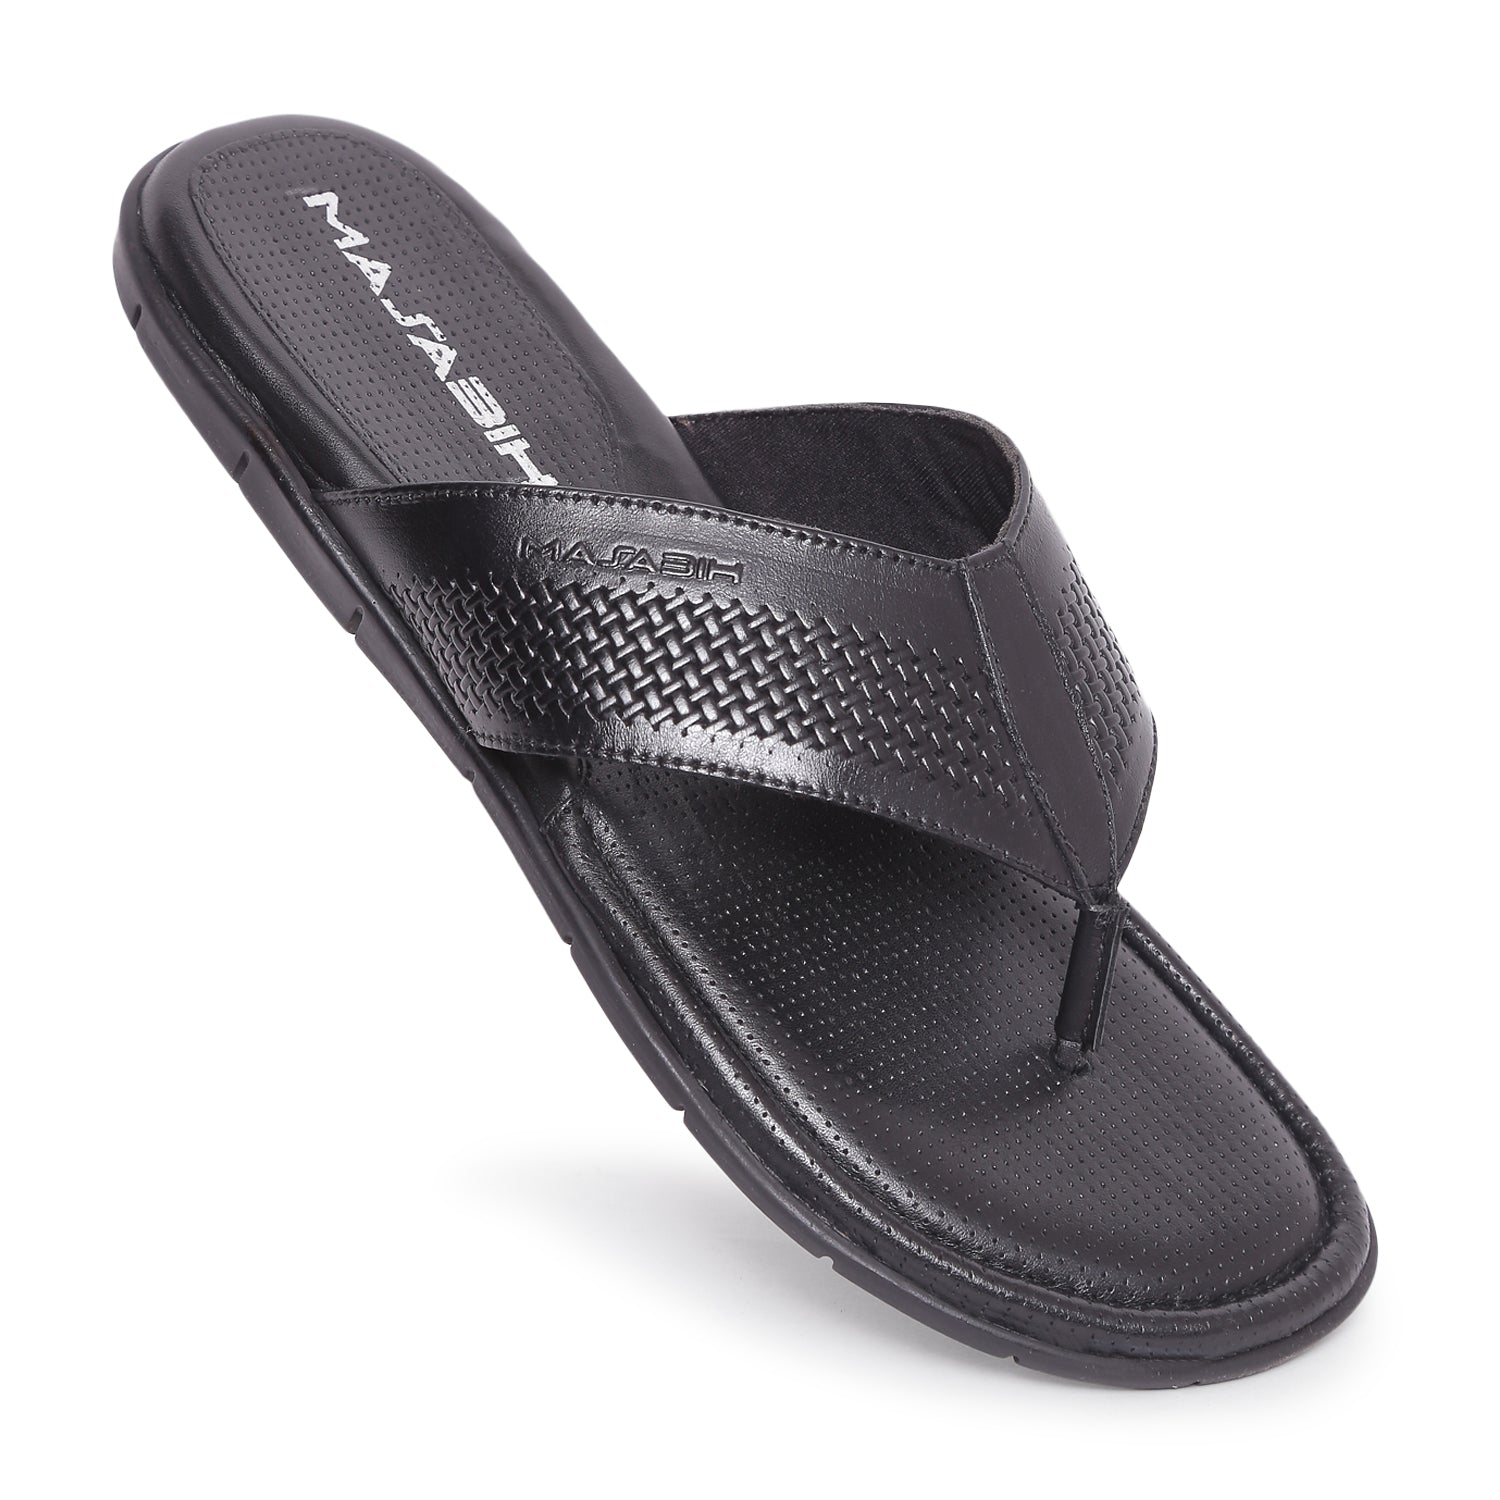 MASABIH Geniune Leather Soft Mesh Print Black Color modern thong sandals for Mens